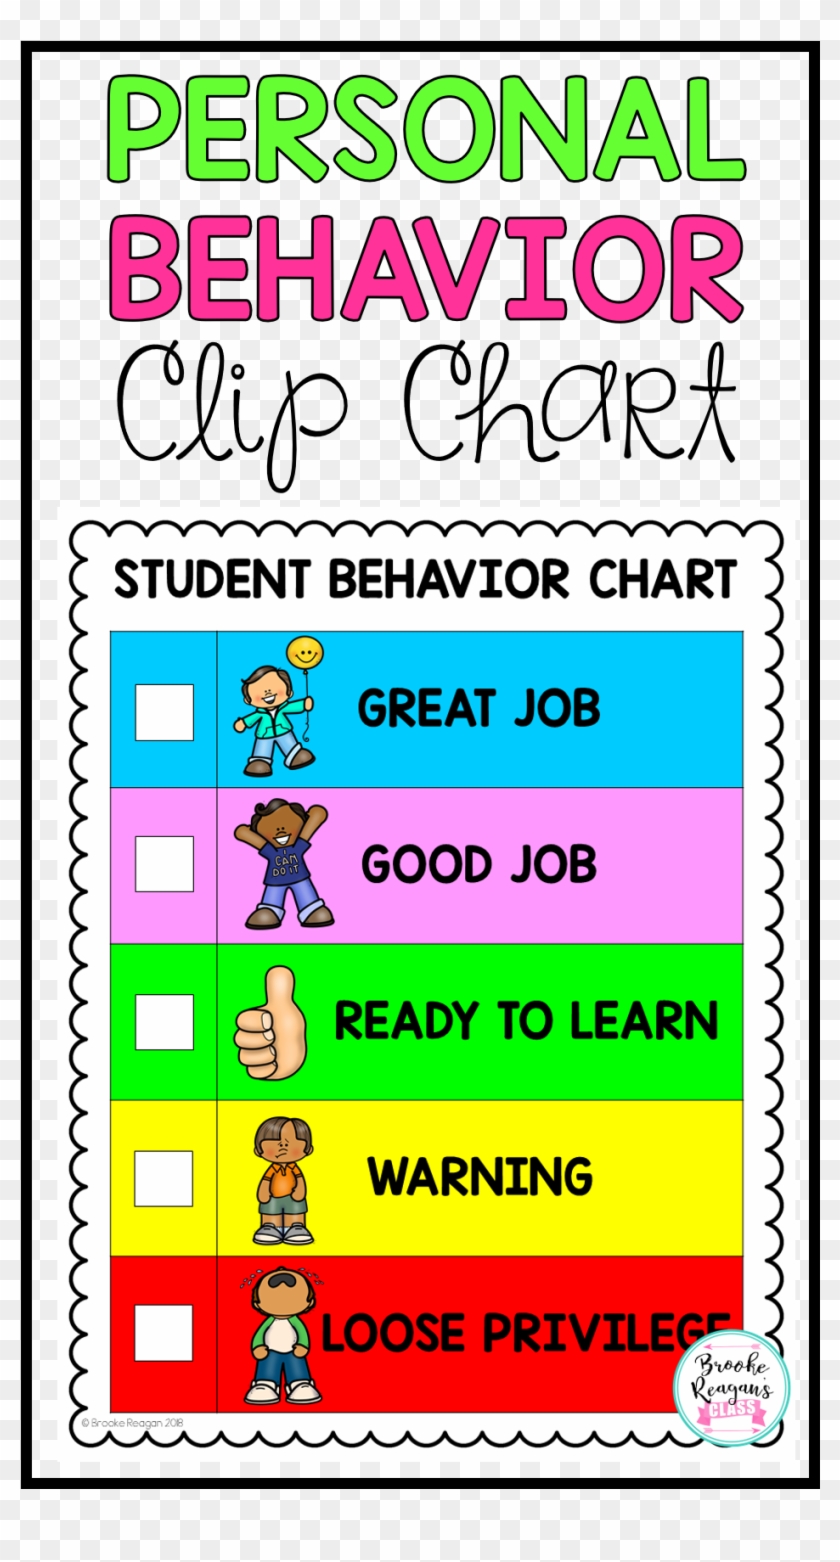 Personal Behavior Clip Charts - Poster #1671098